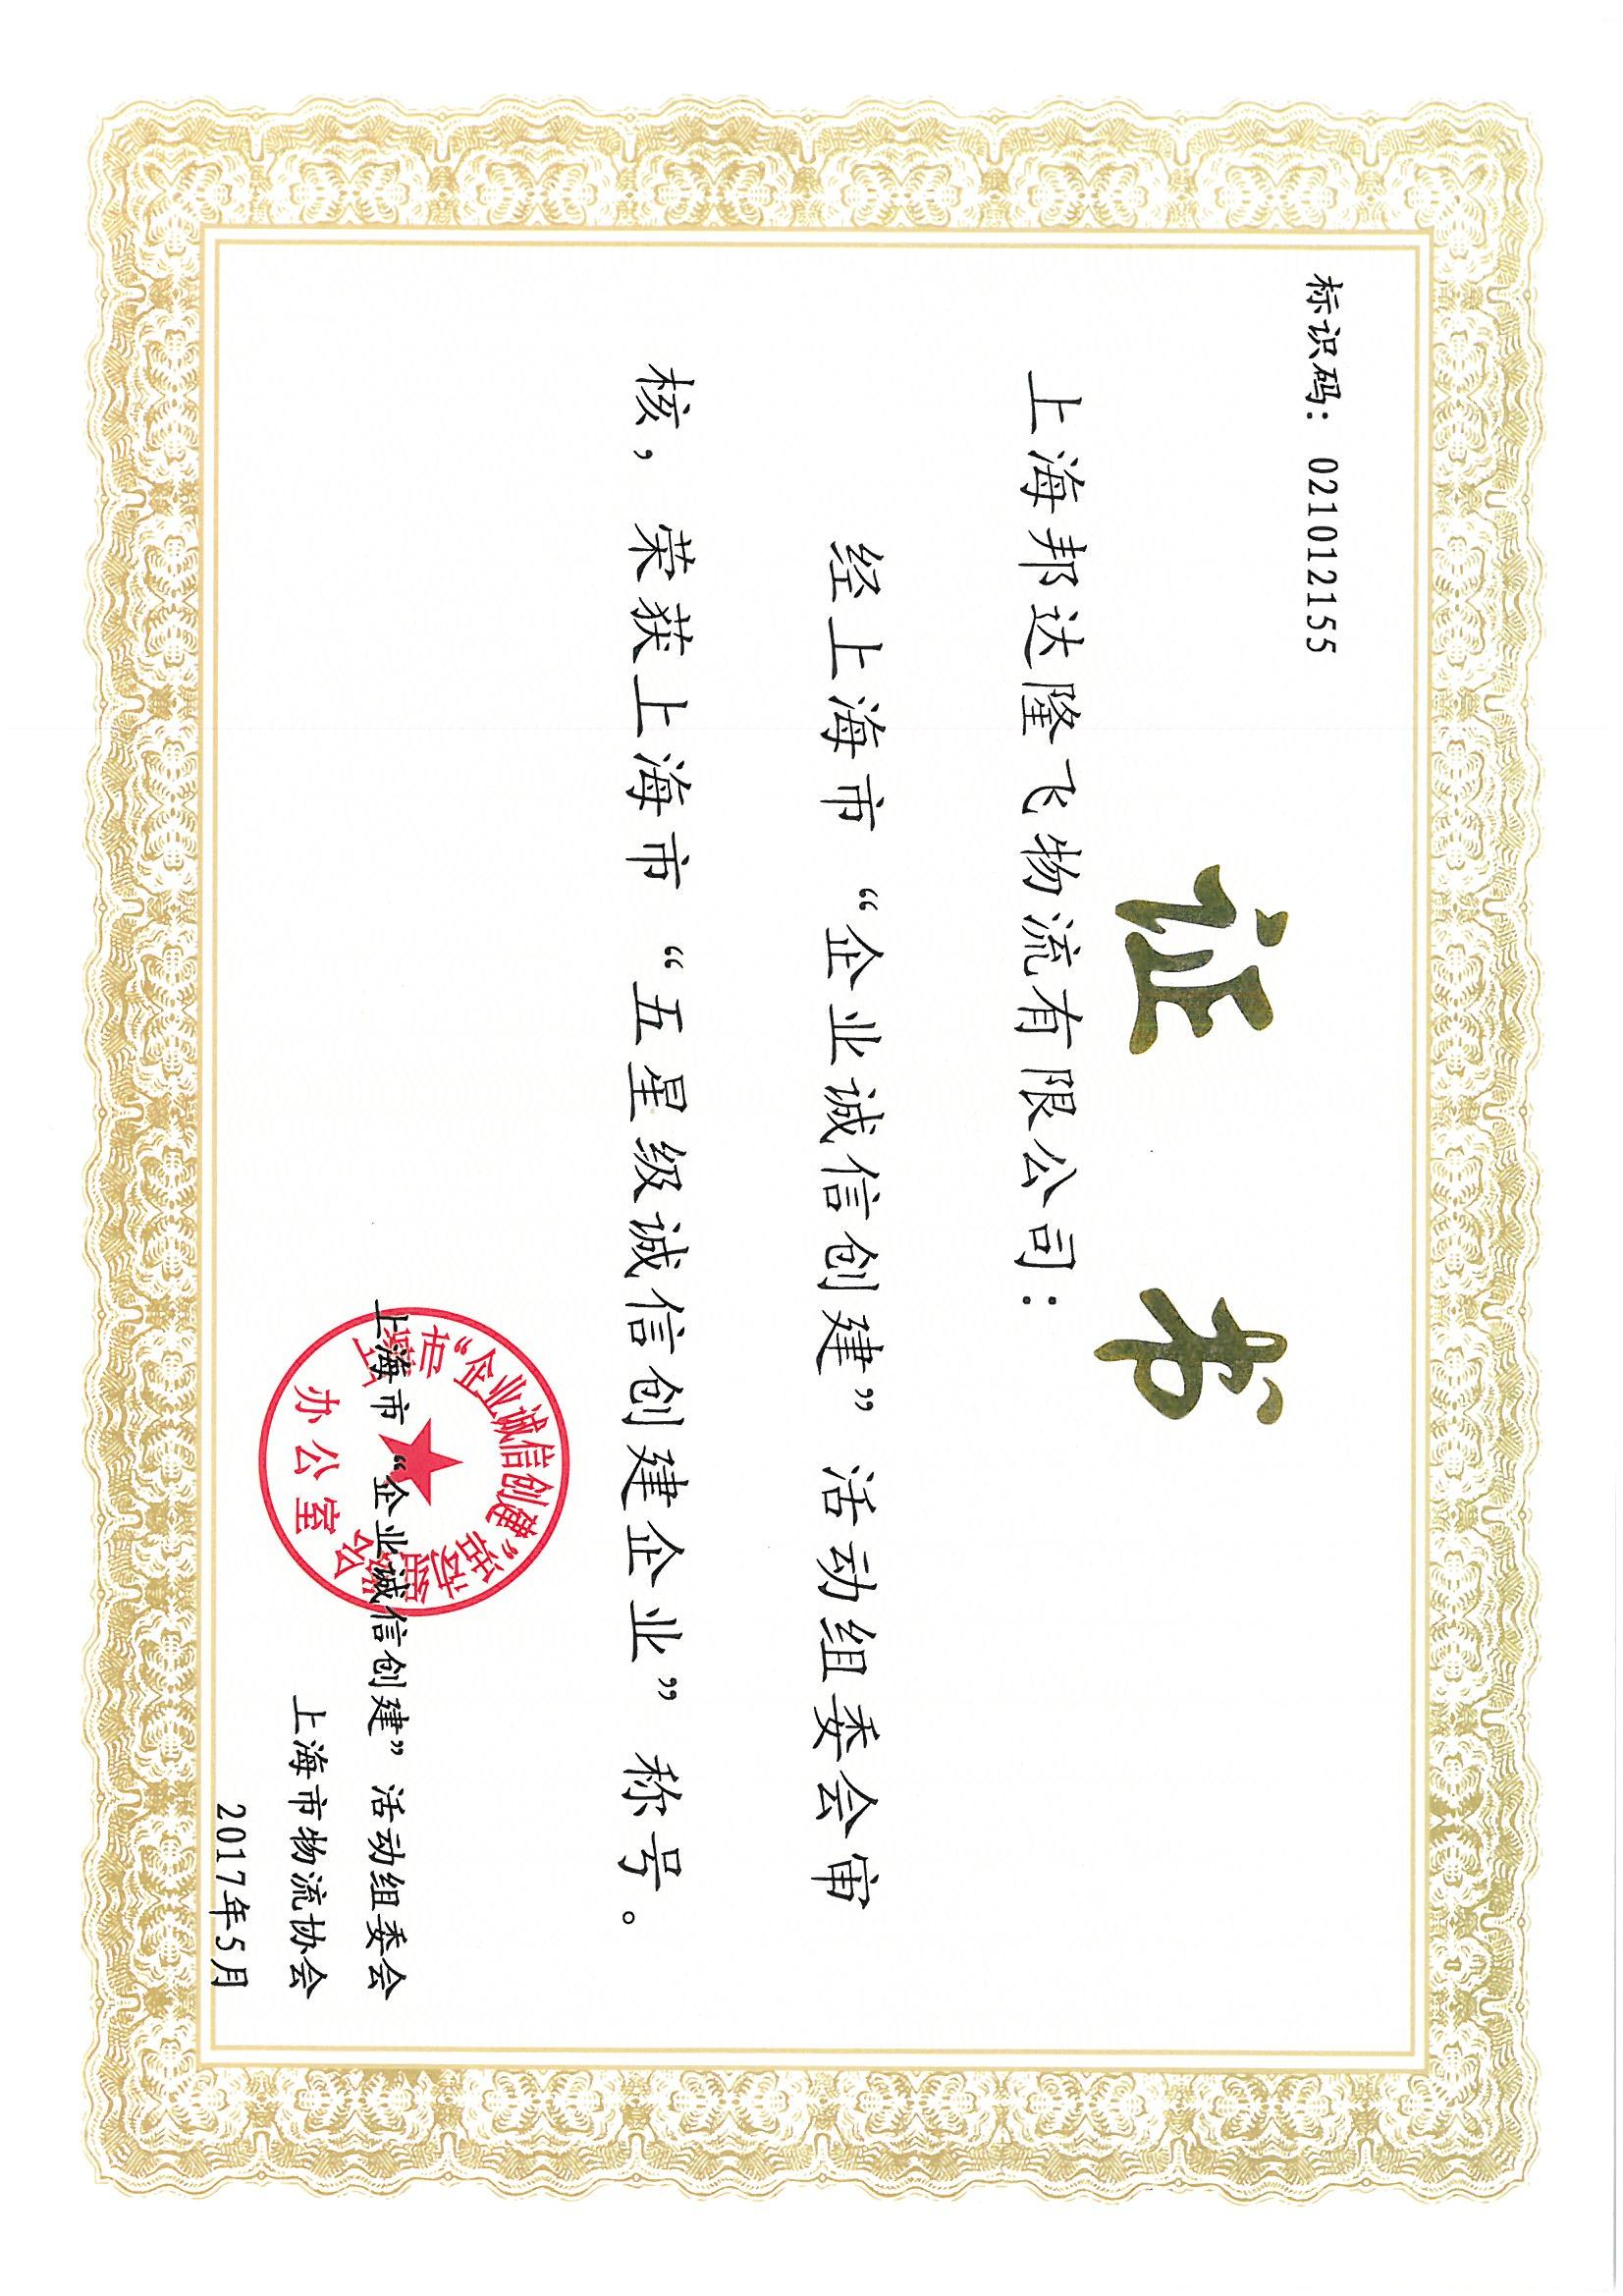 Warm congratulations | Shanghai Bangda Longfei Logistics Co., Ltd. won the Shanghai 